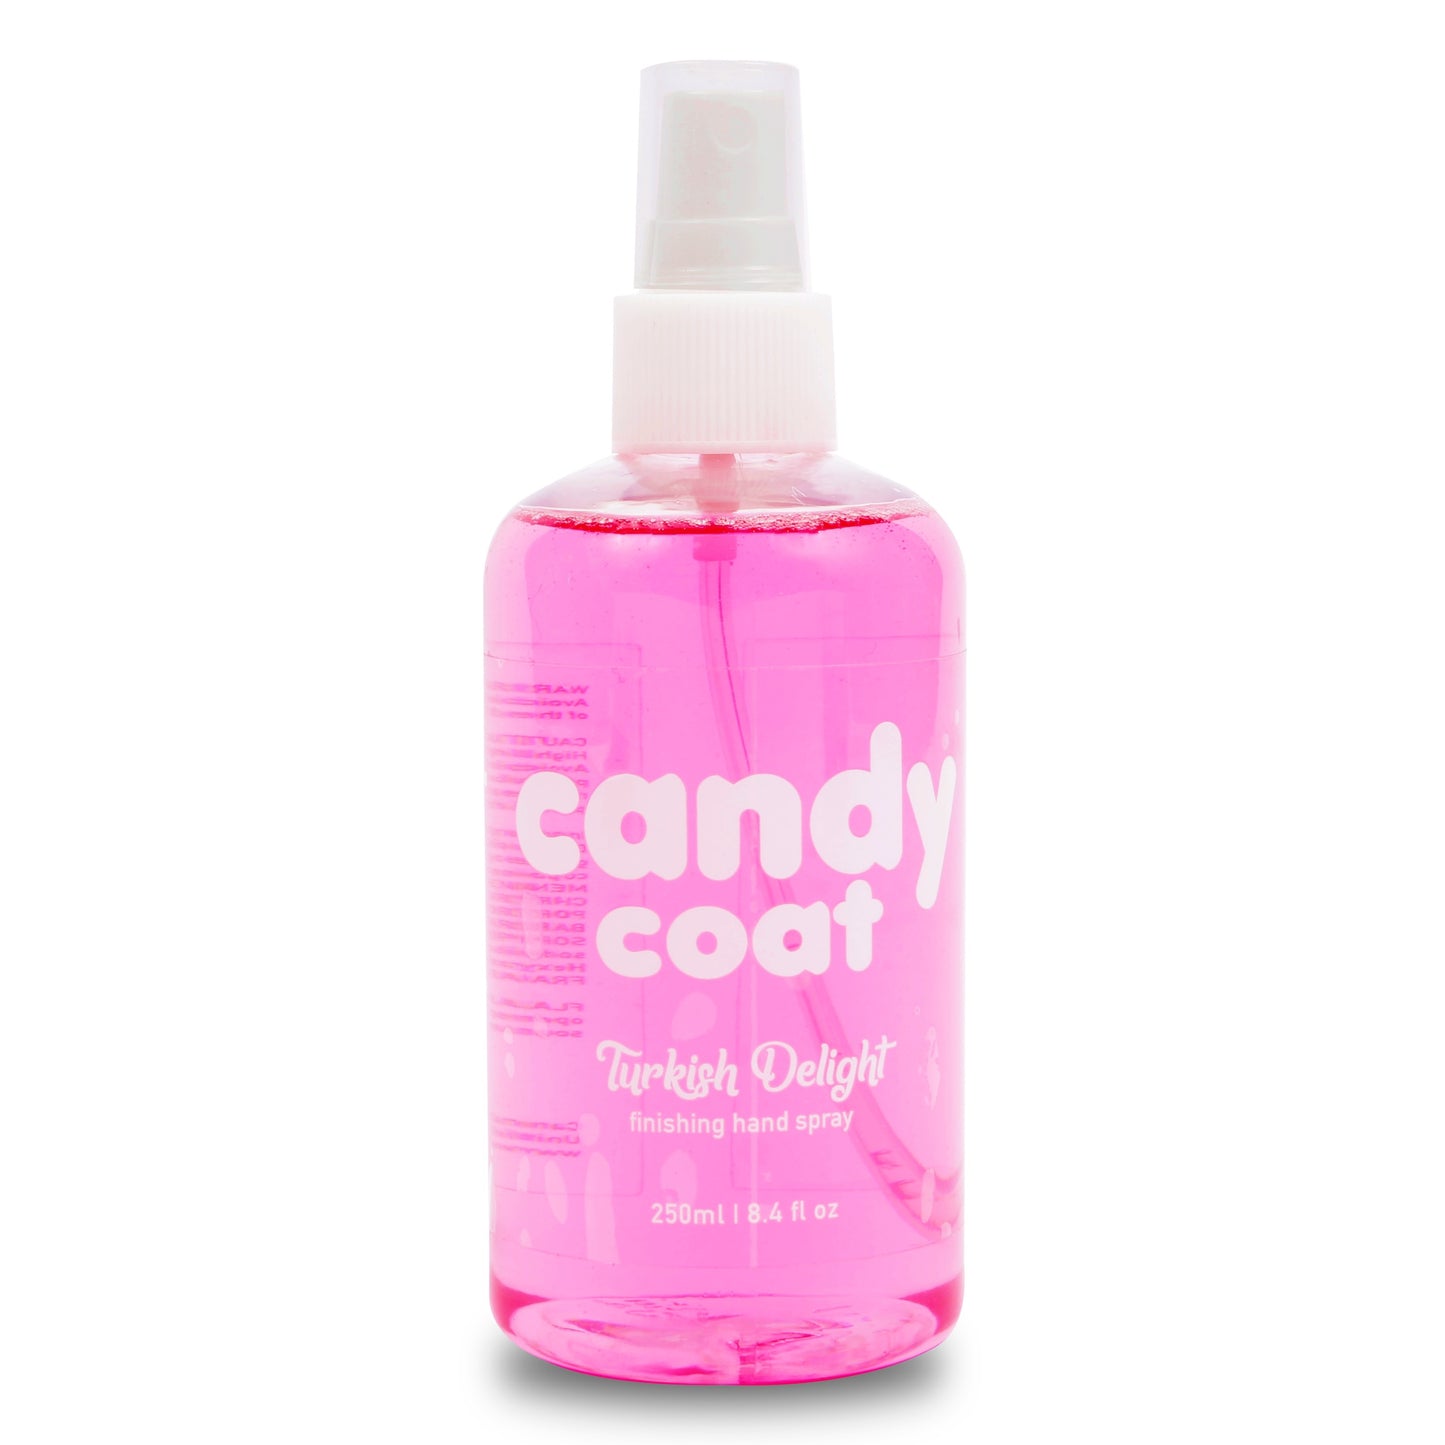 Candy Coat - Turkish Delight Finishing Hand Spray - Candy Coat